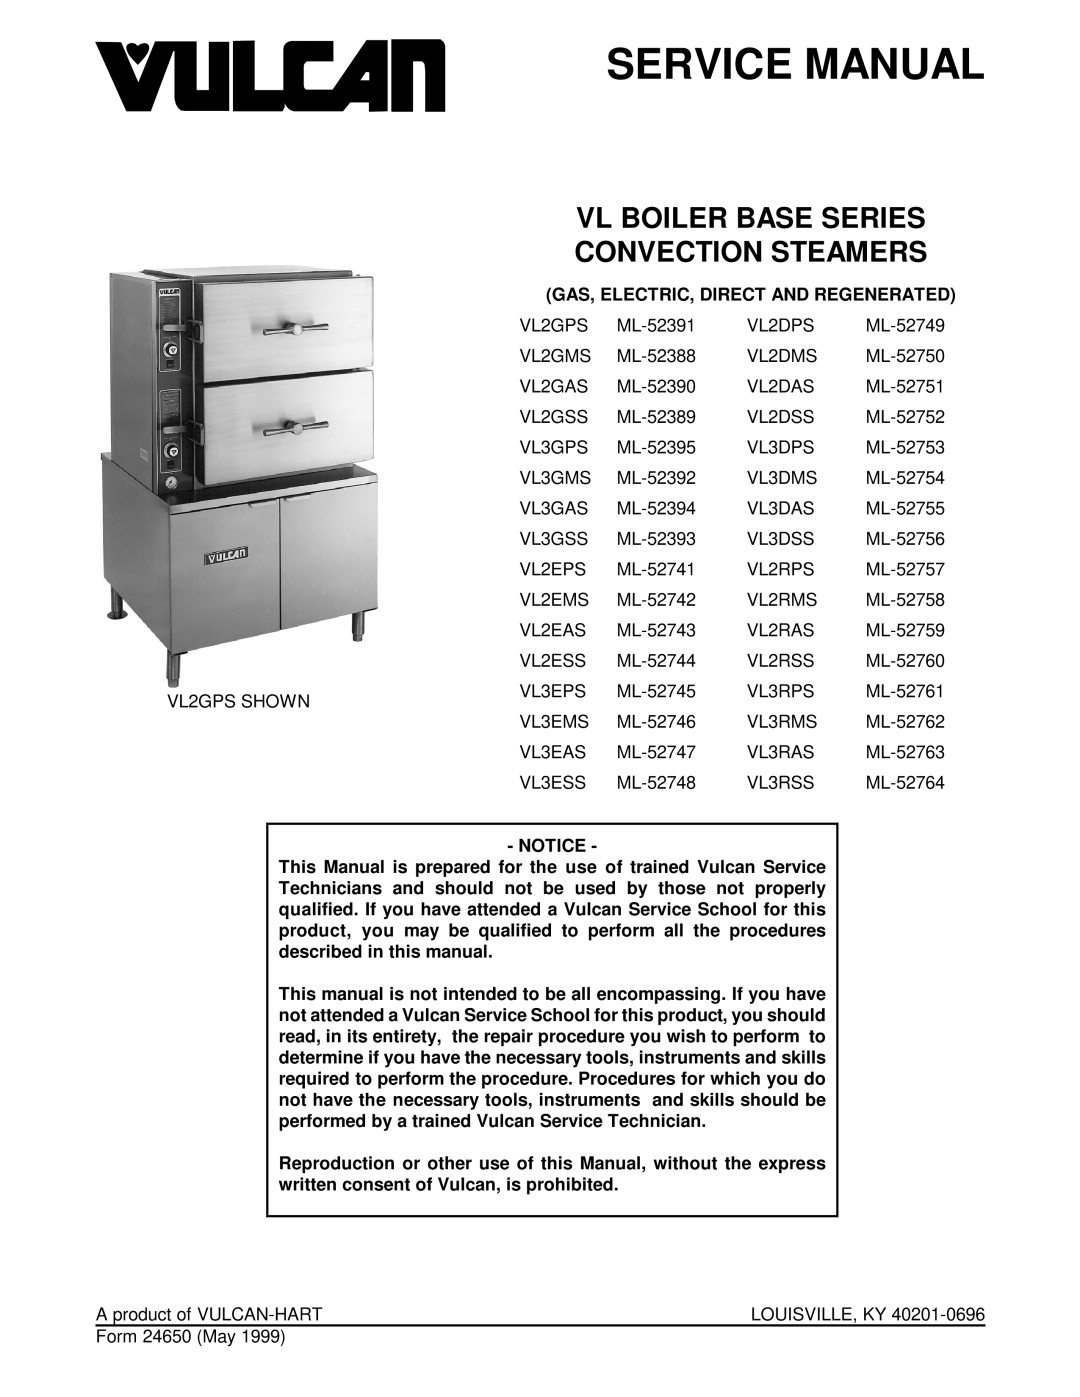 Vulcan-Hart VL2GMS, VL3GMS, VL3GAS, VL2GAS, VL2GSS service manual Vl Boiler Base Series Convection Steamers, Service Manual 